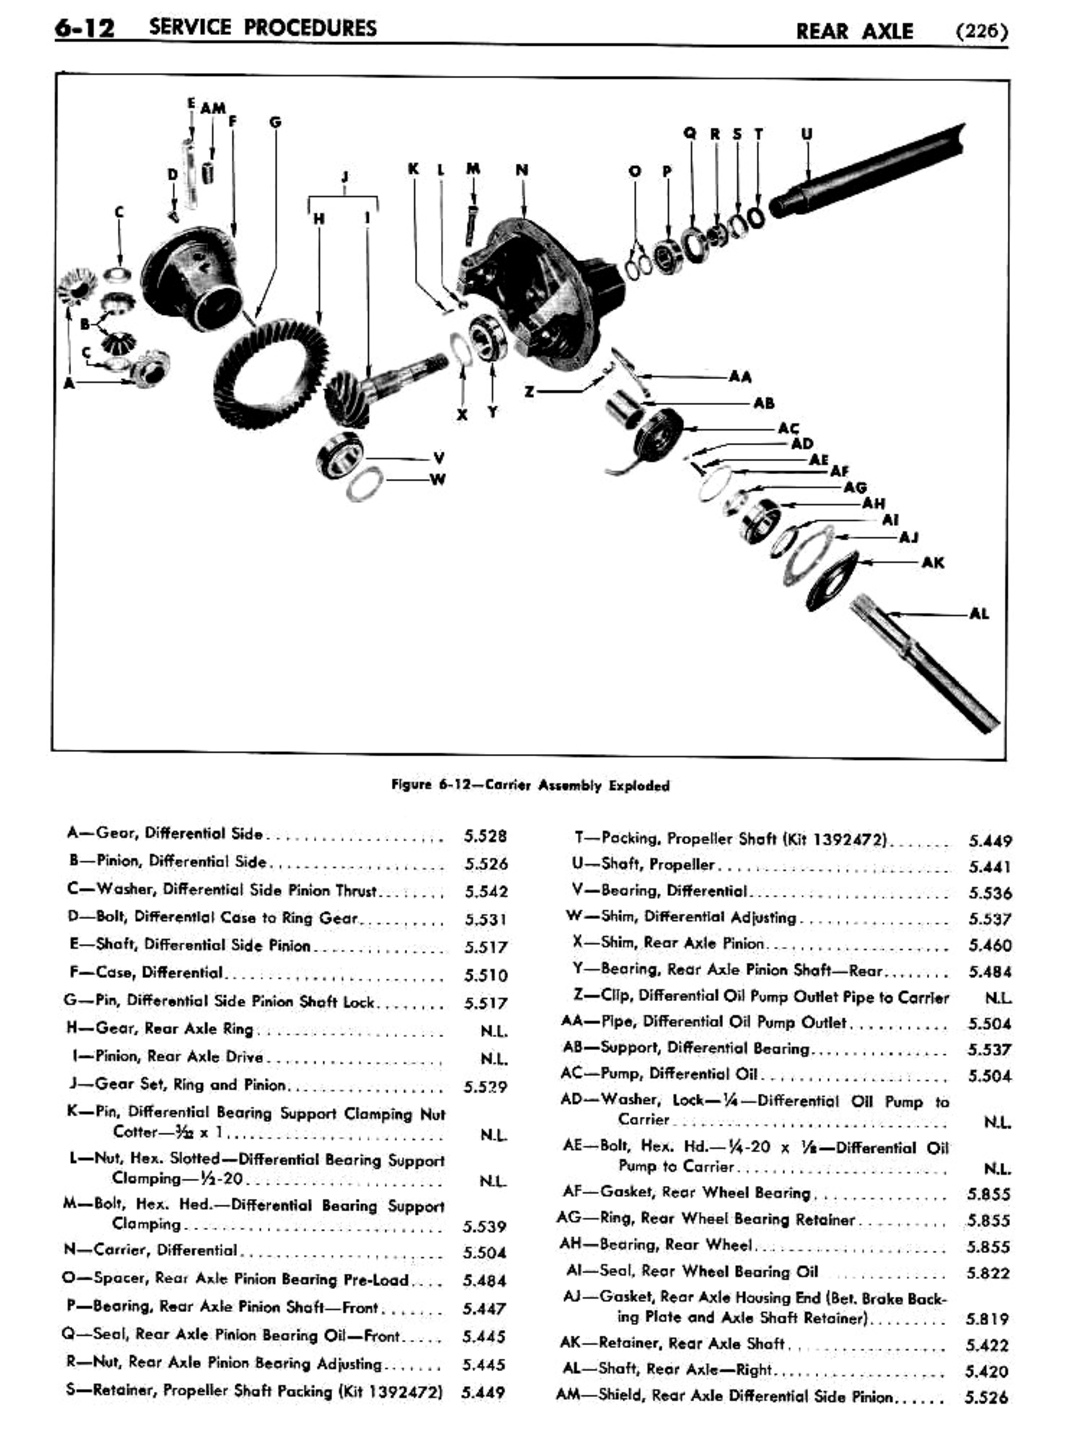 n_07 1956 Buick Shop Manual - Rear Axle-012-012.jpg